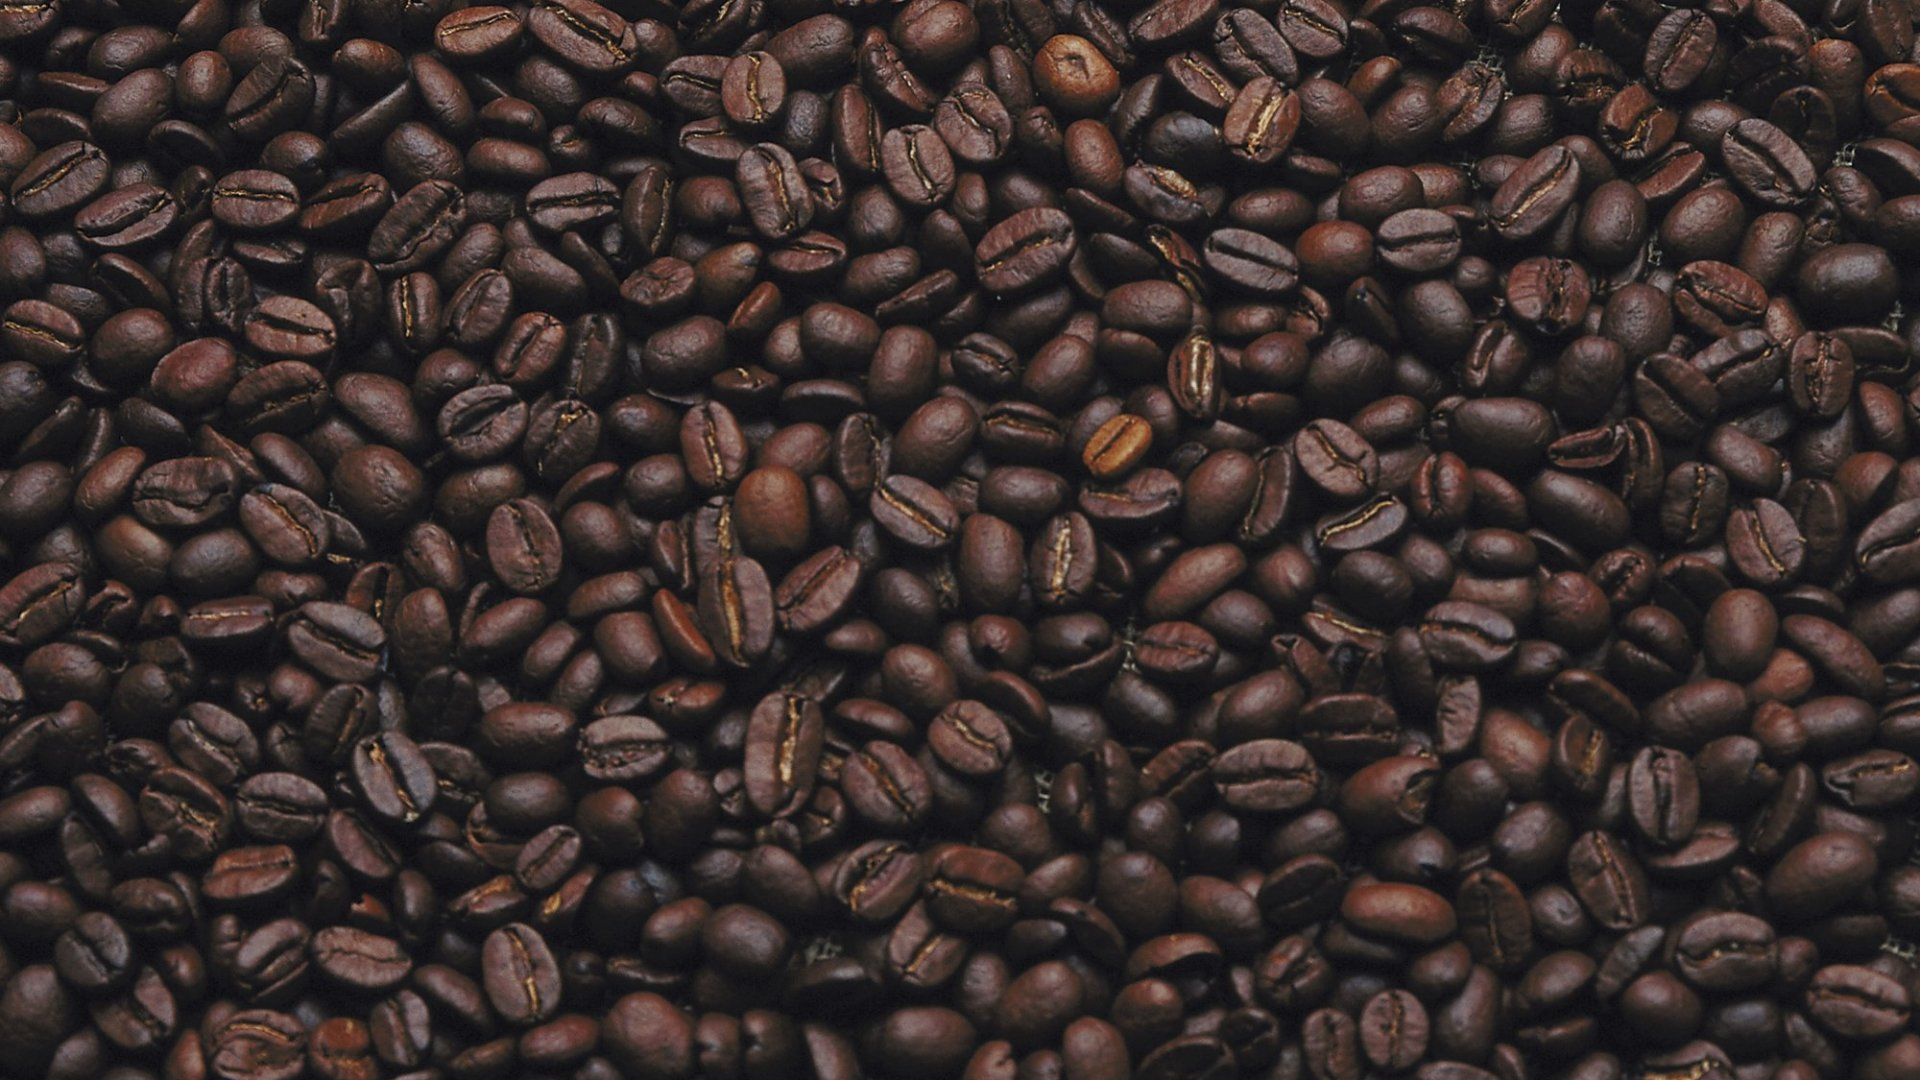 Caffeine derives from coffee beans